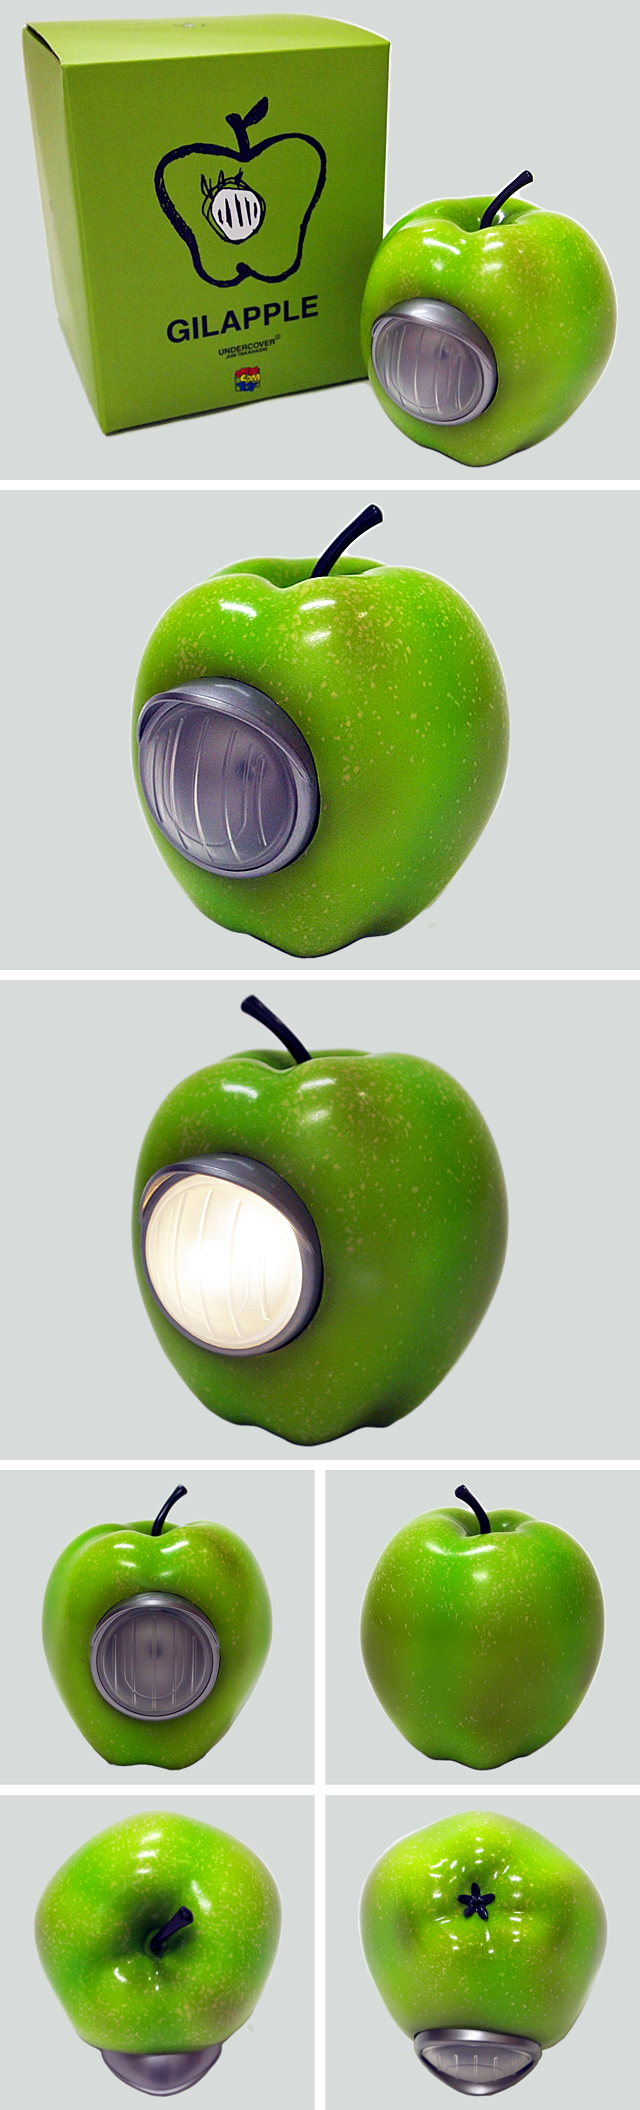 UNDERCOVER】リンゴ型ルームライト「ギラップル」に新色「ライト